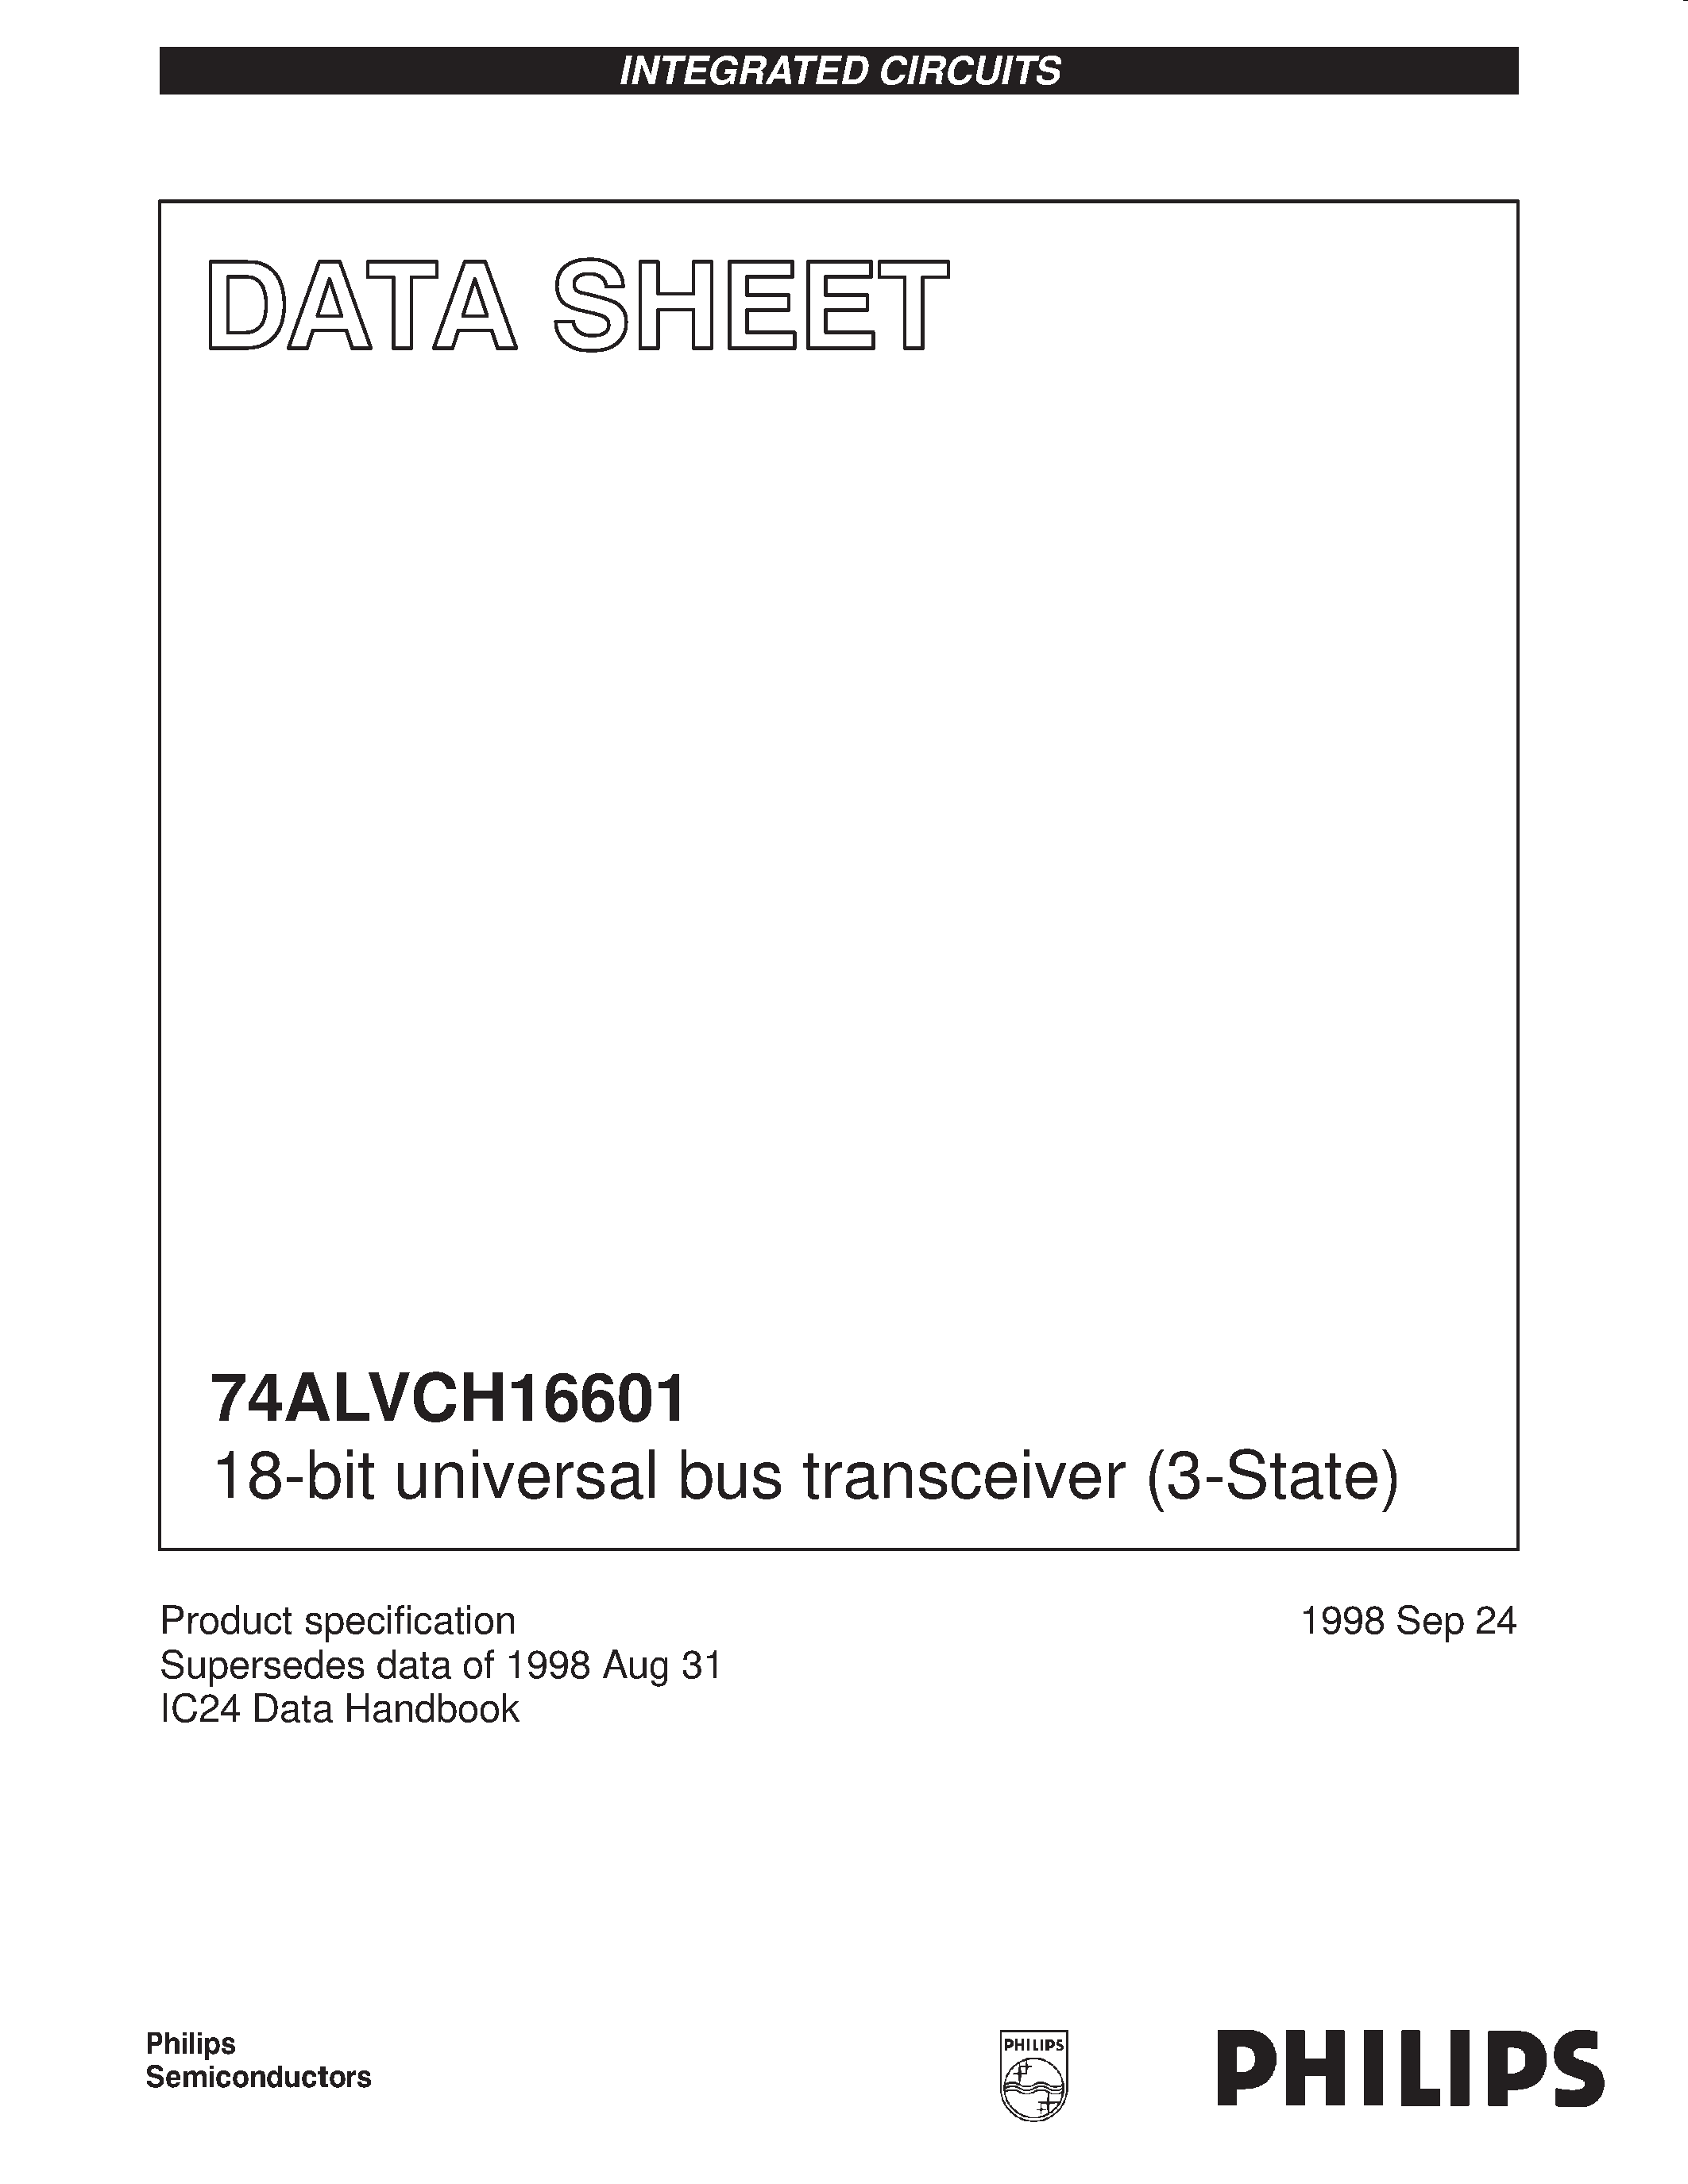 Даташит 74ALVCH16601 - 18-bit universal bus transceiver 3-State страница 1